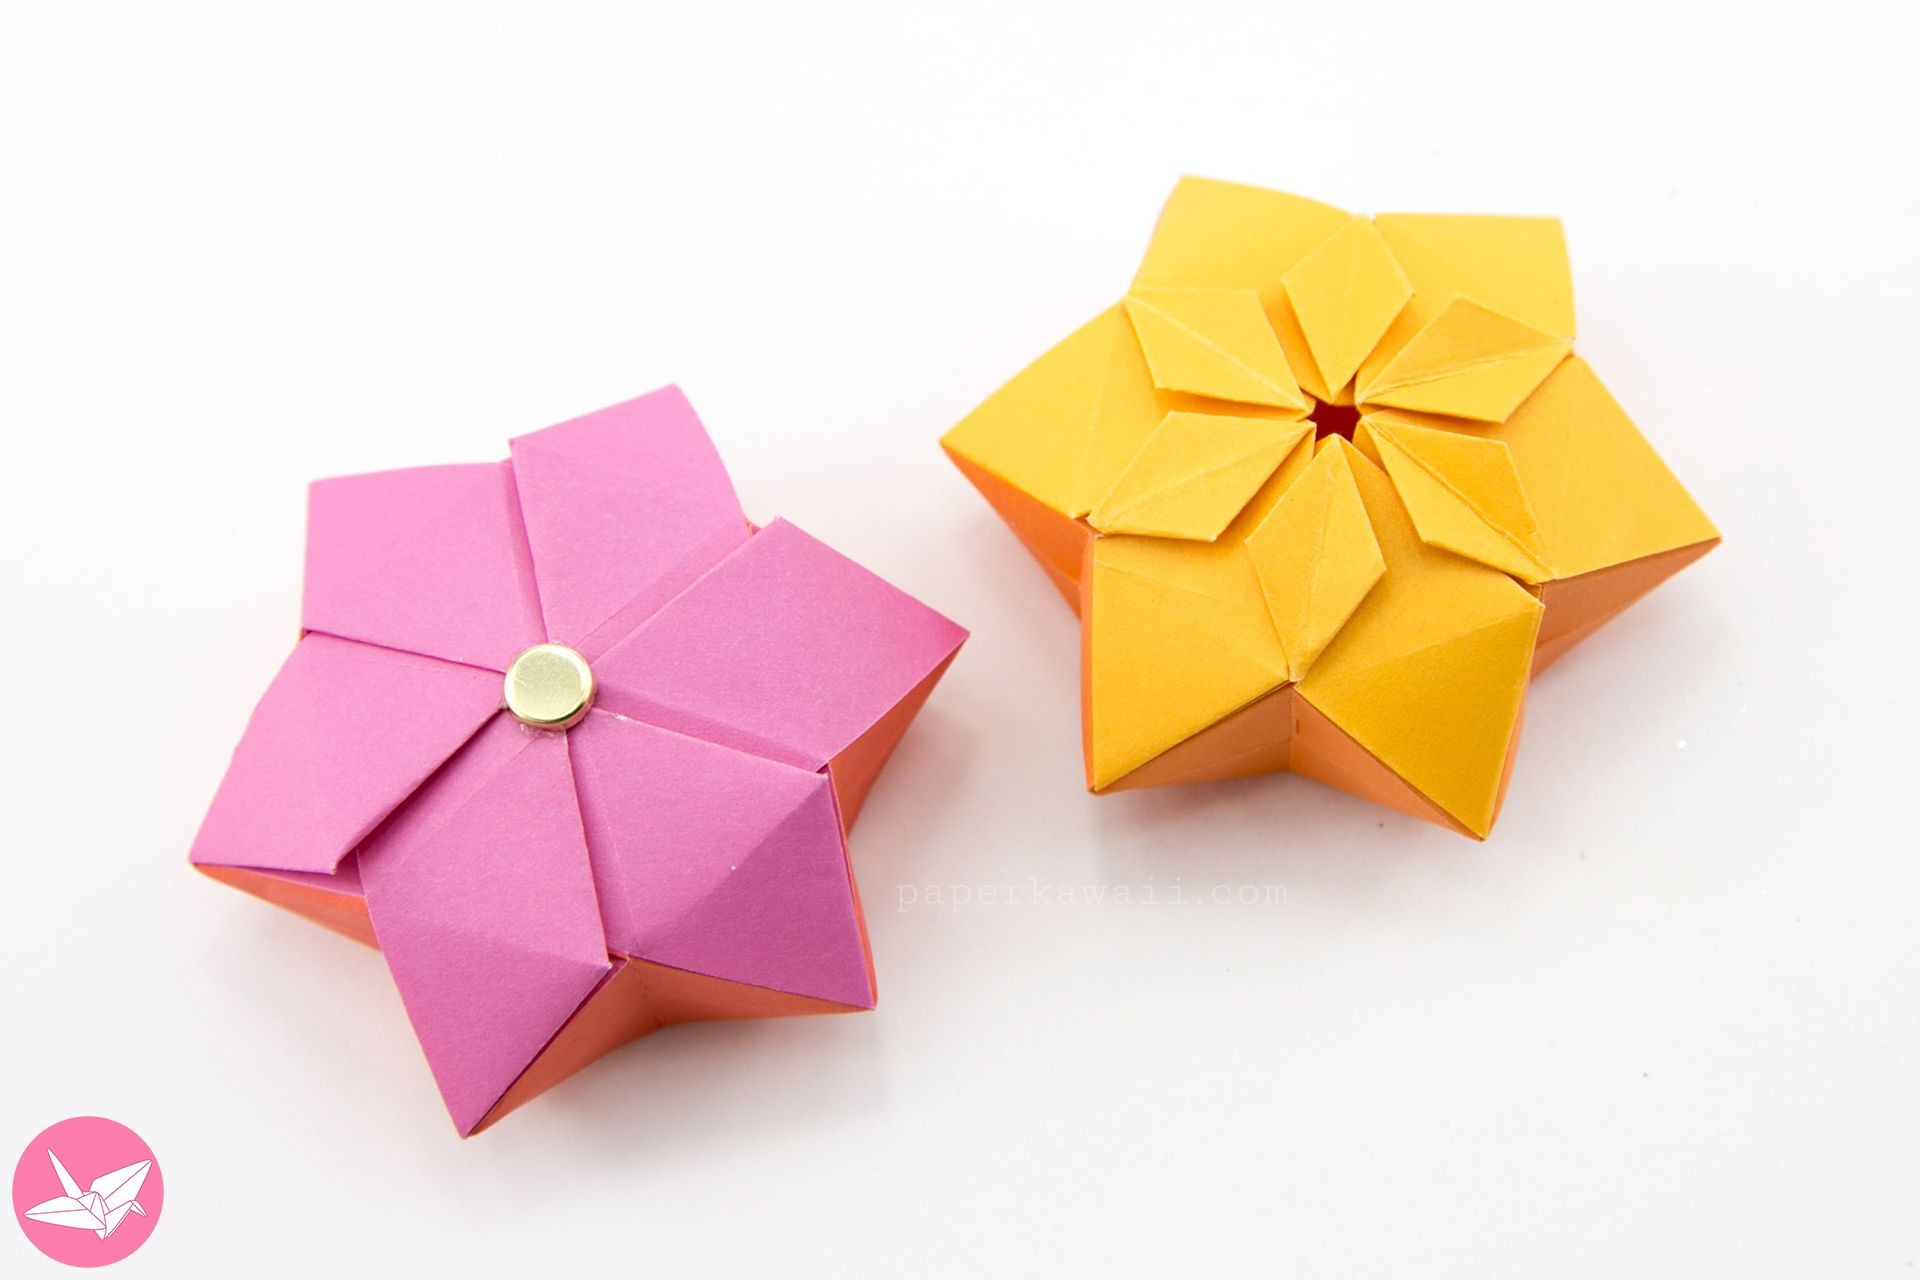 Origami Papercraft origami Hexagonal Puffy Star Tutorial